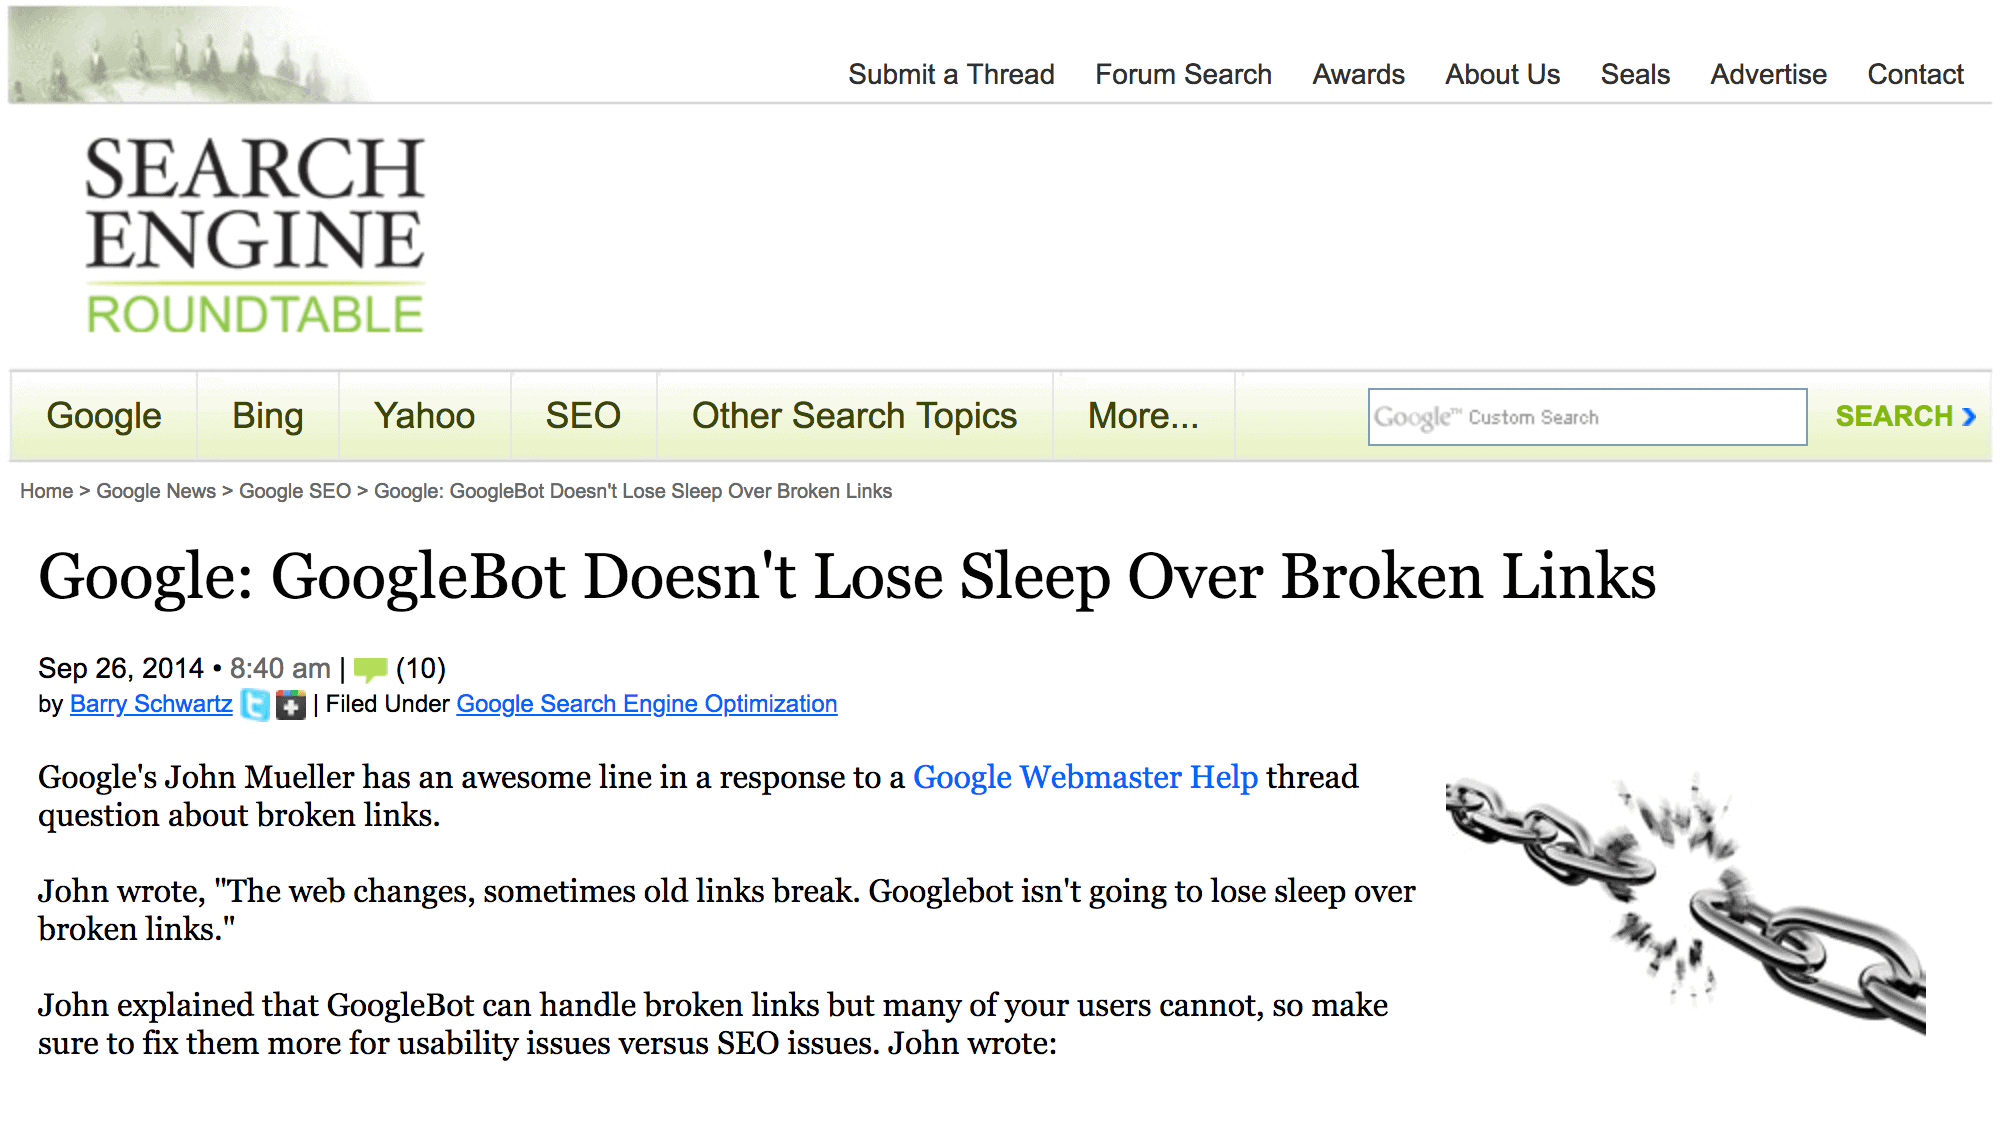 Google: "GoogleBot doesn't lose sleep over broken links"